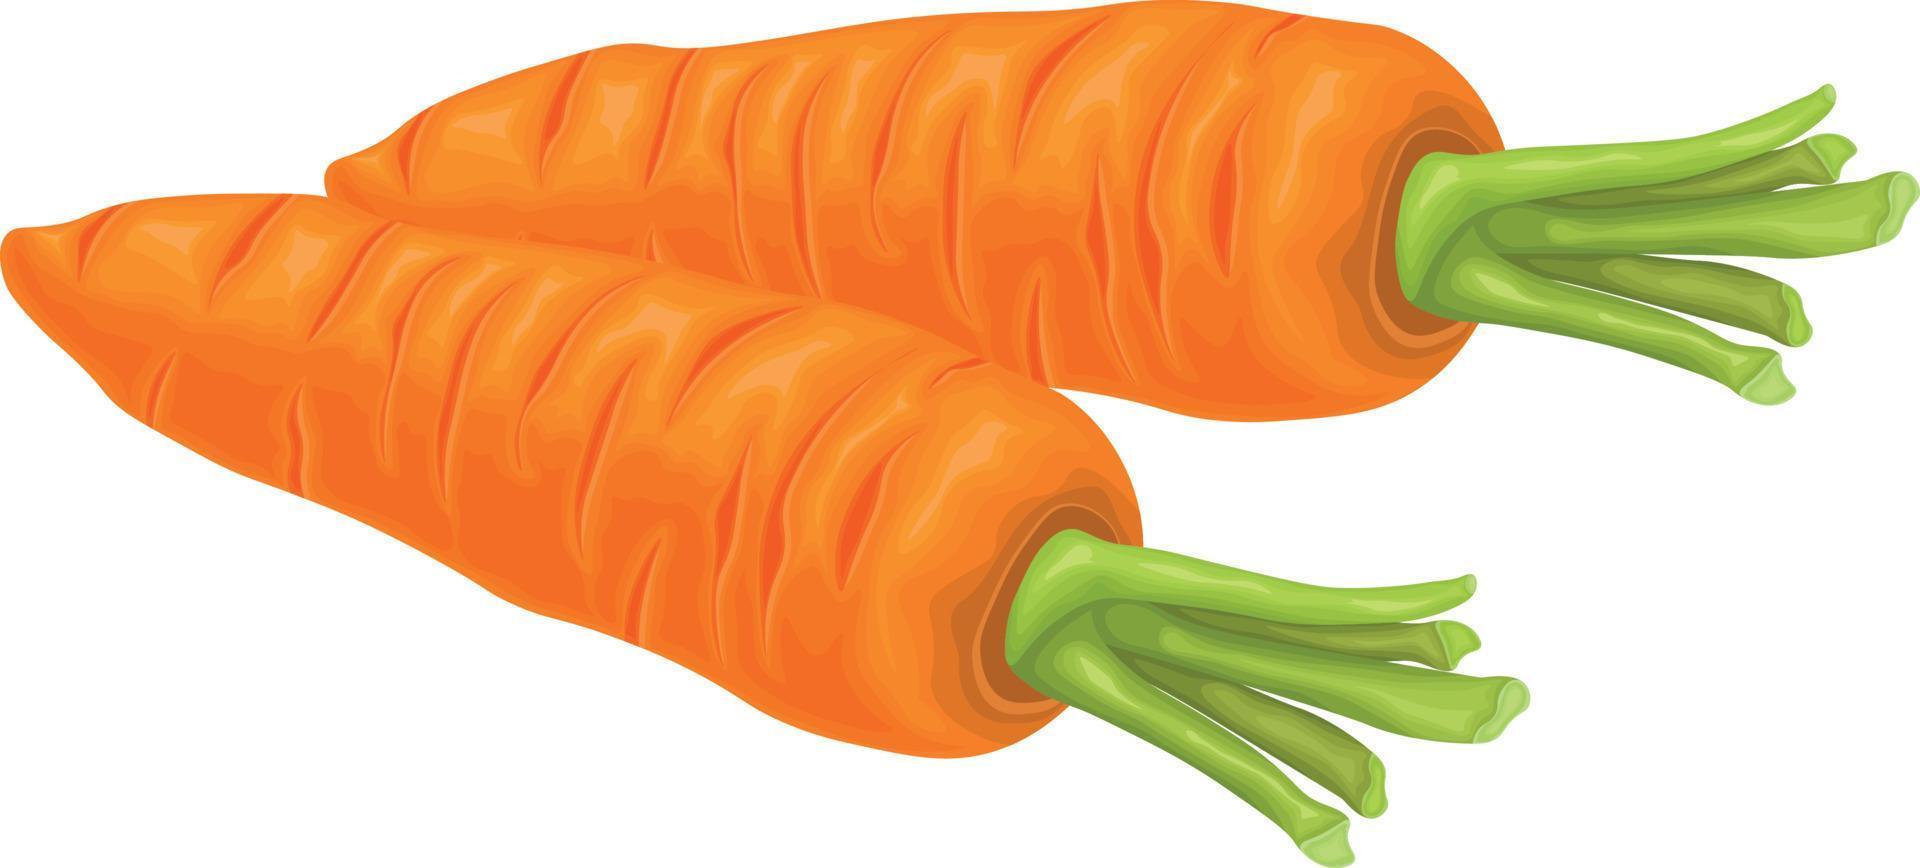 morot. bild av en mogen morot. vitamin grönsak. organisk mat. orange morötter. vektor illustration isolerat på en vit bakgrund